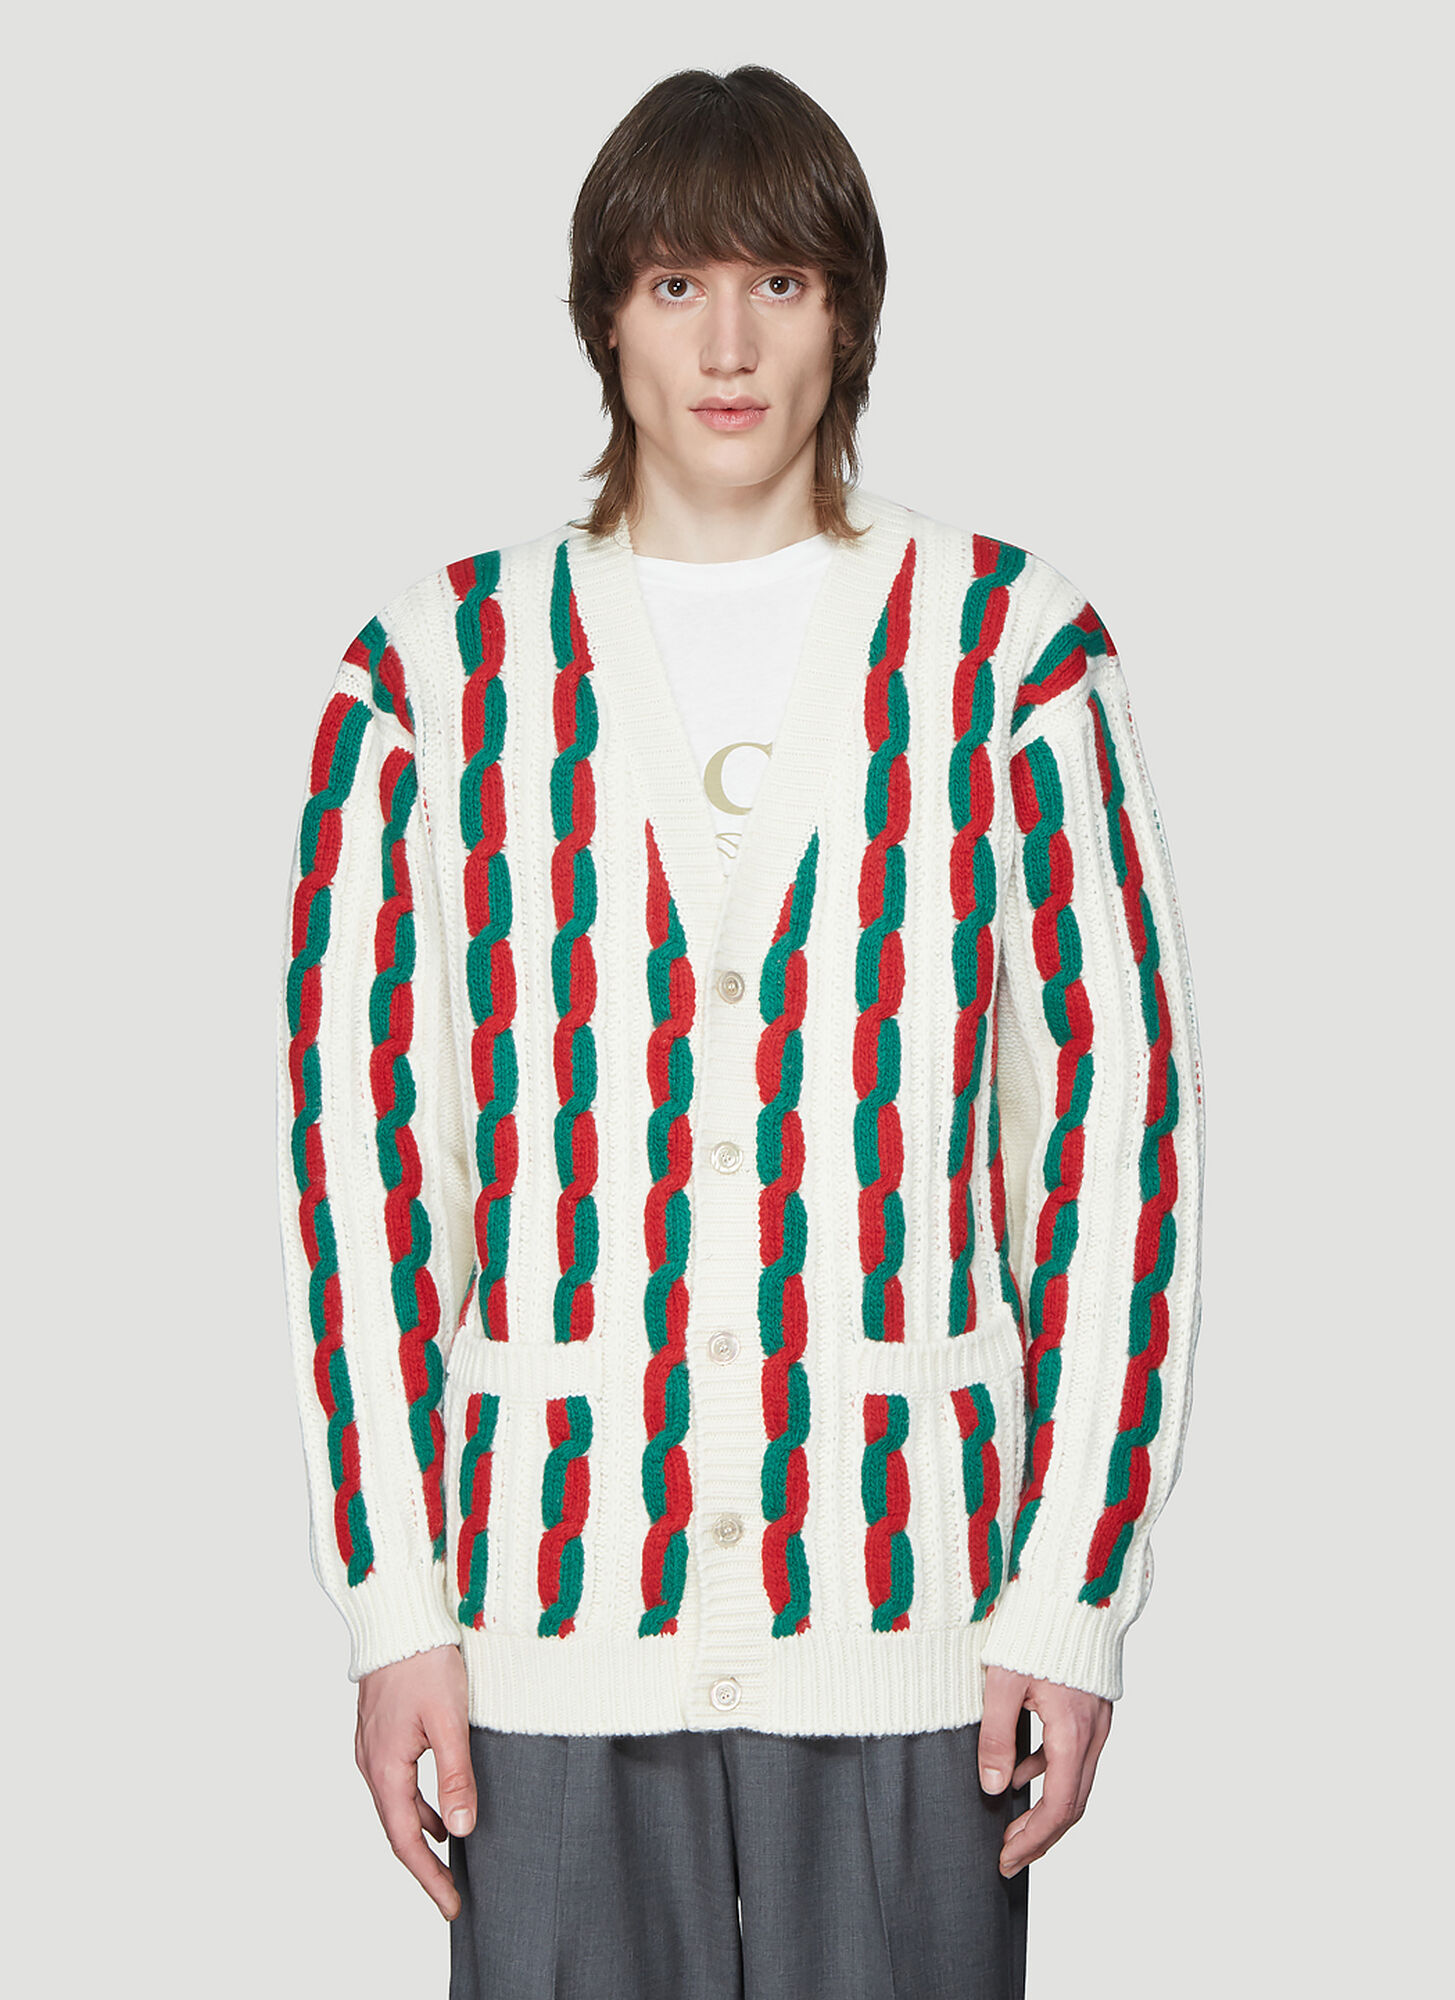 Gucci Contrast Stripe Cable-Knit Cardigan in White size S | The Fashionisto